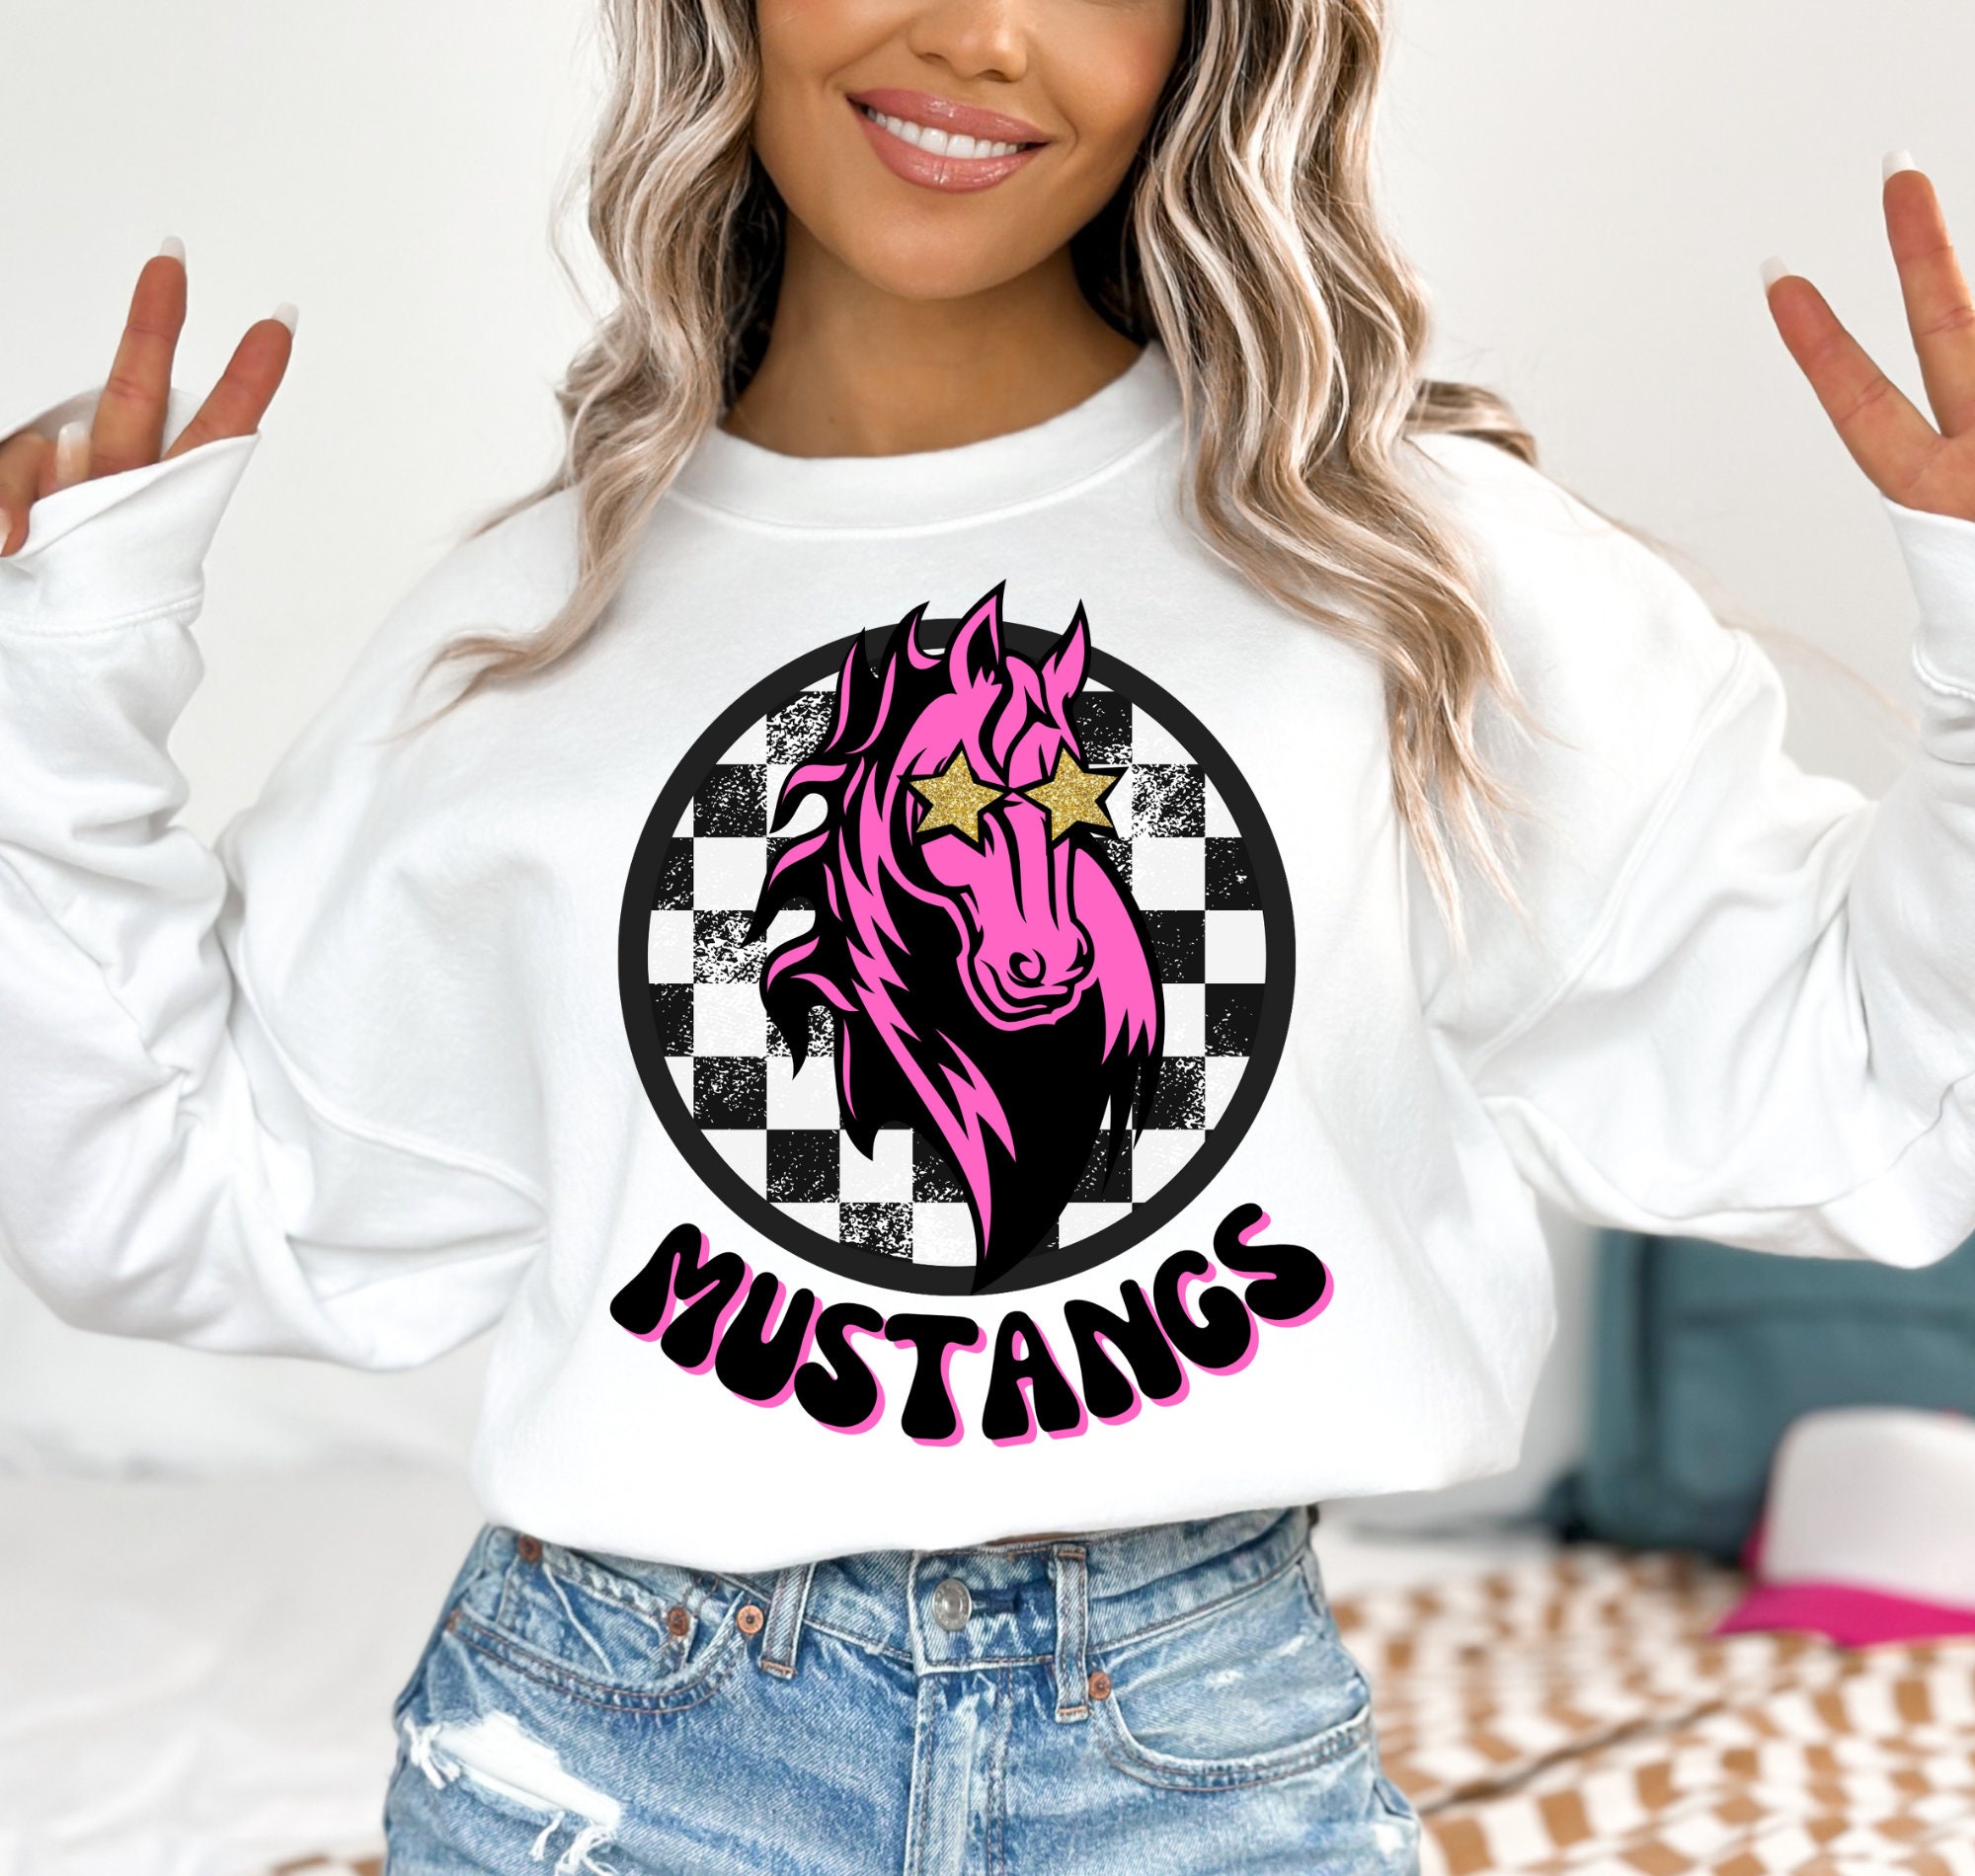 Mustang Pink - Etsy